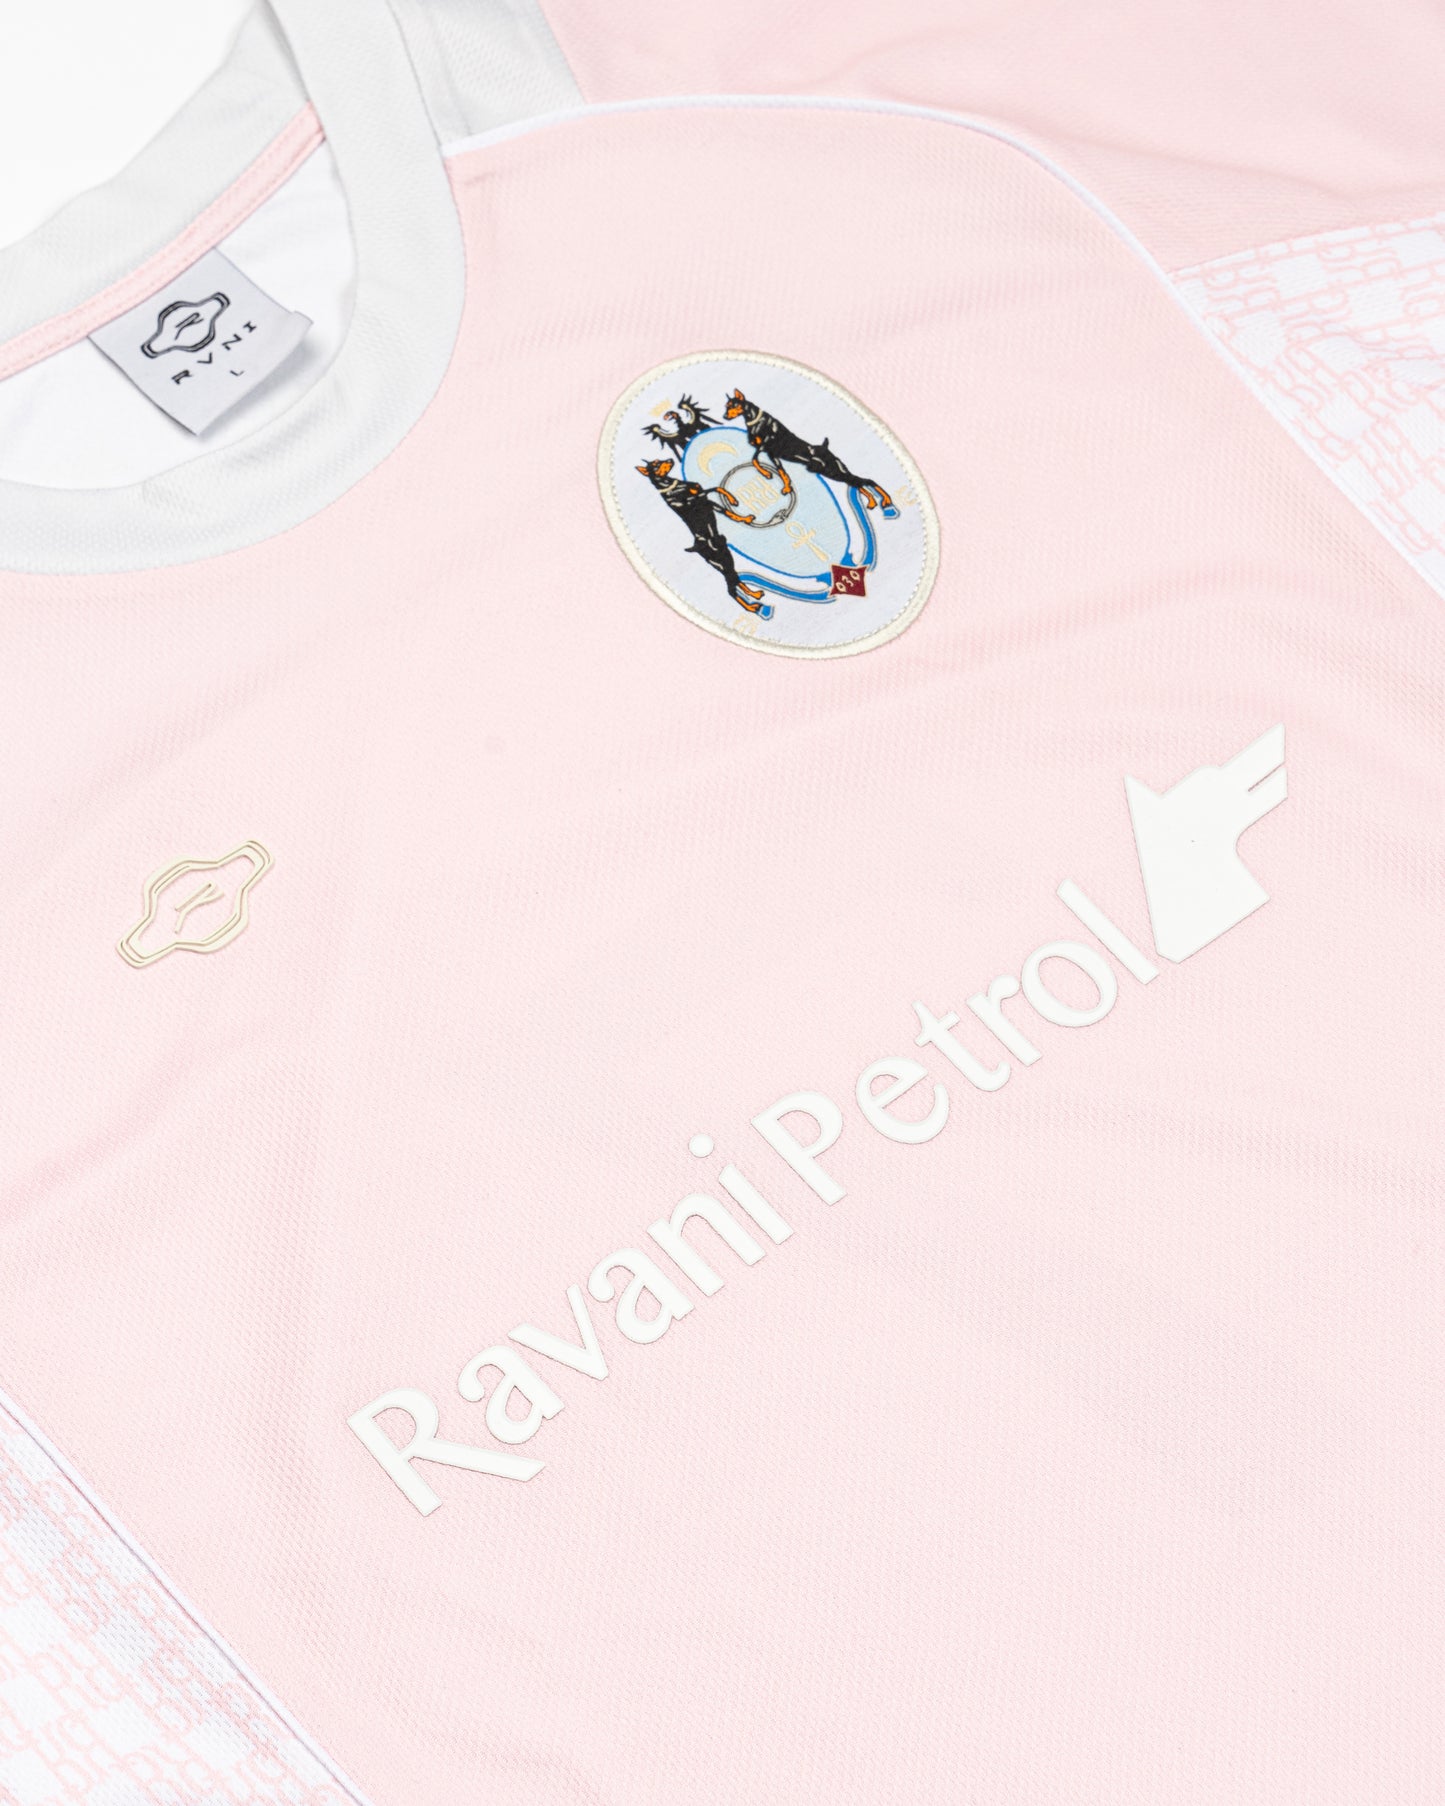 FC Ravani 7 Years Jersey Lilac Pink